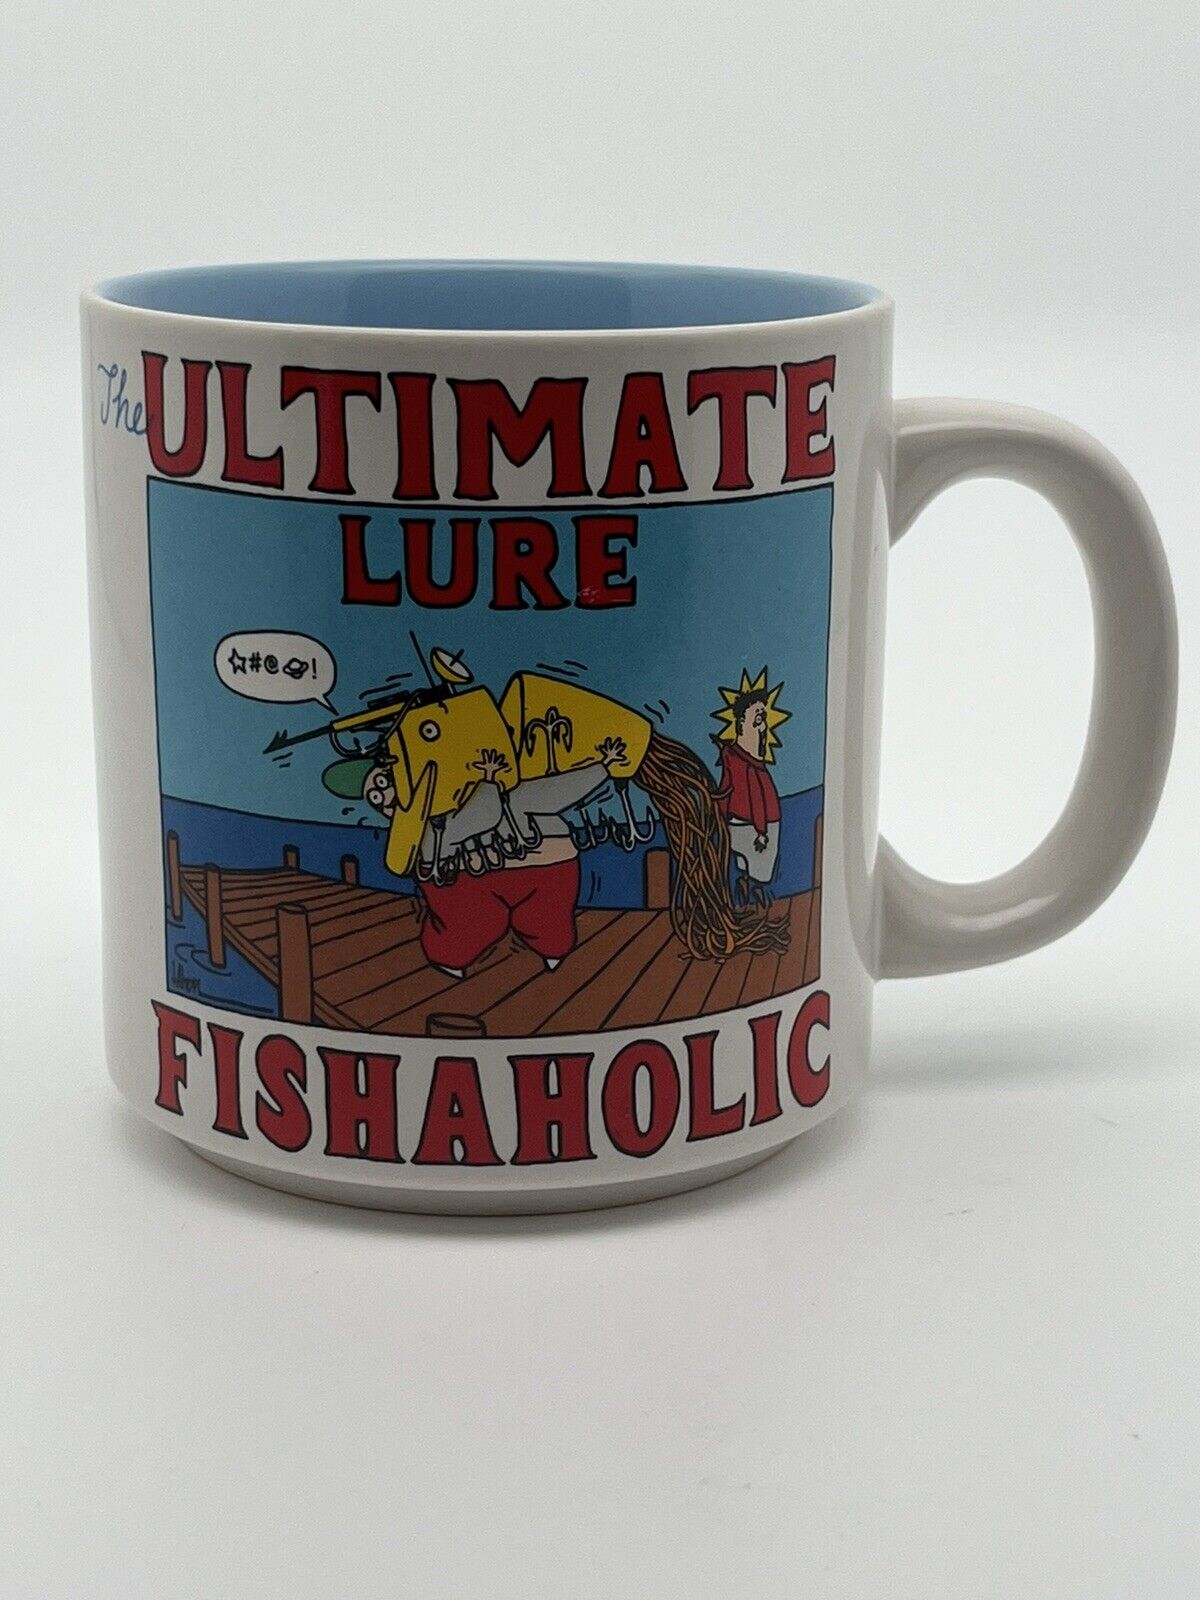 Vintage Papel Fishing Fishaholic The Ultimate Lure Funny 😂 Coffee Tea Cup Mug